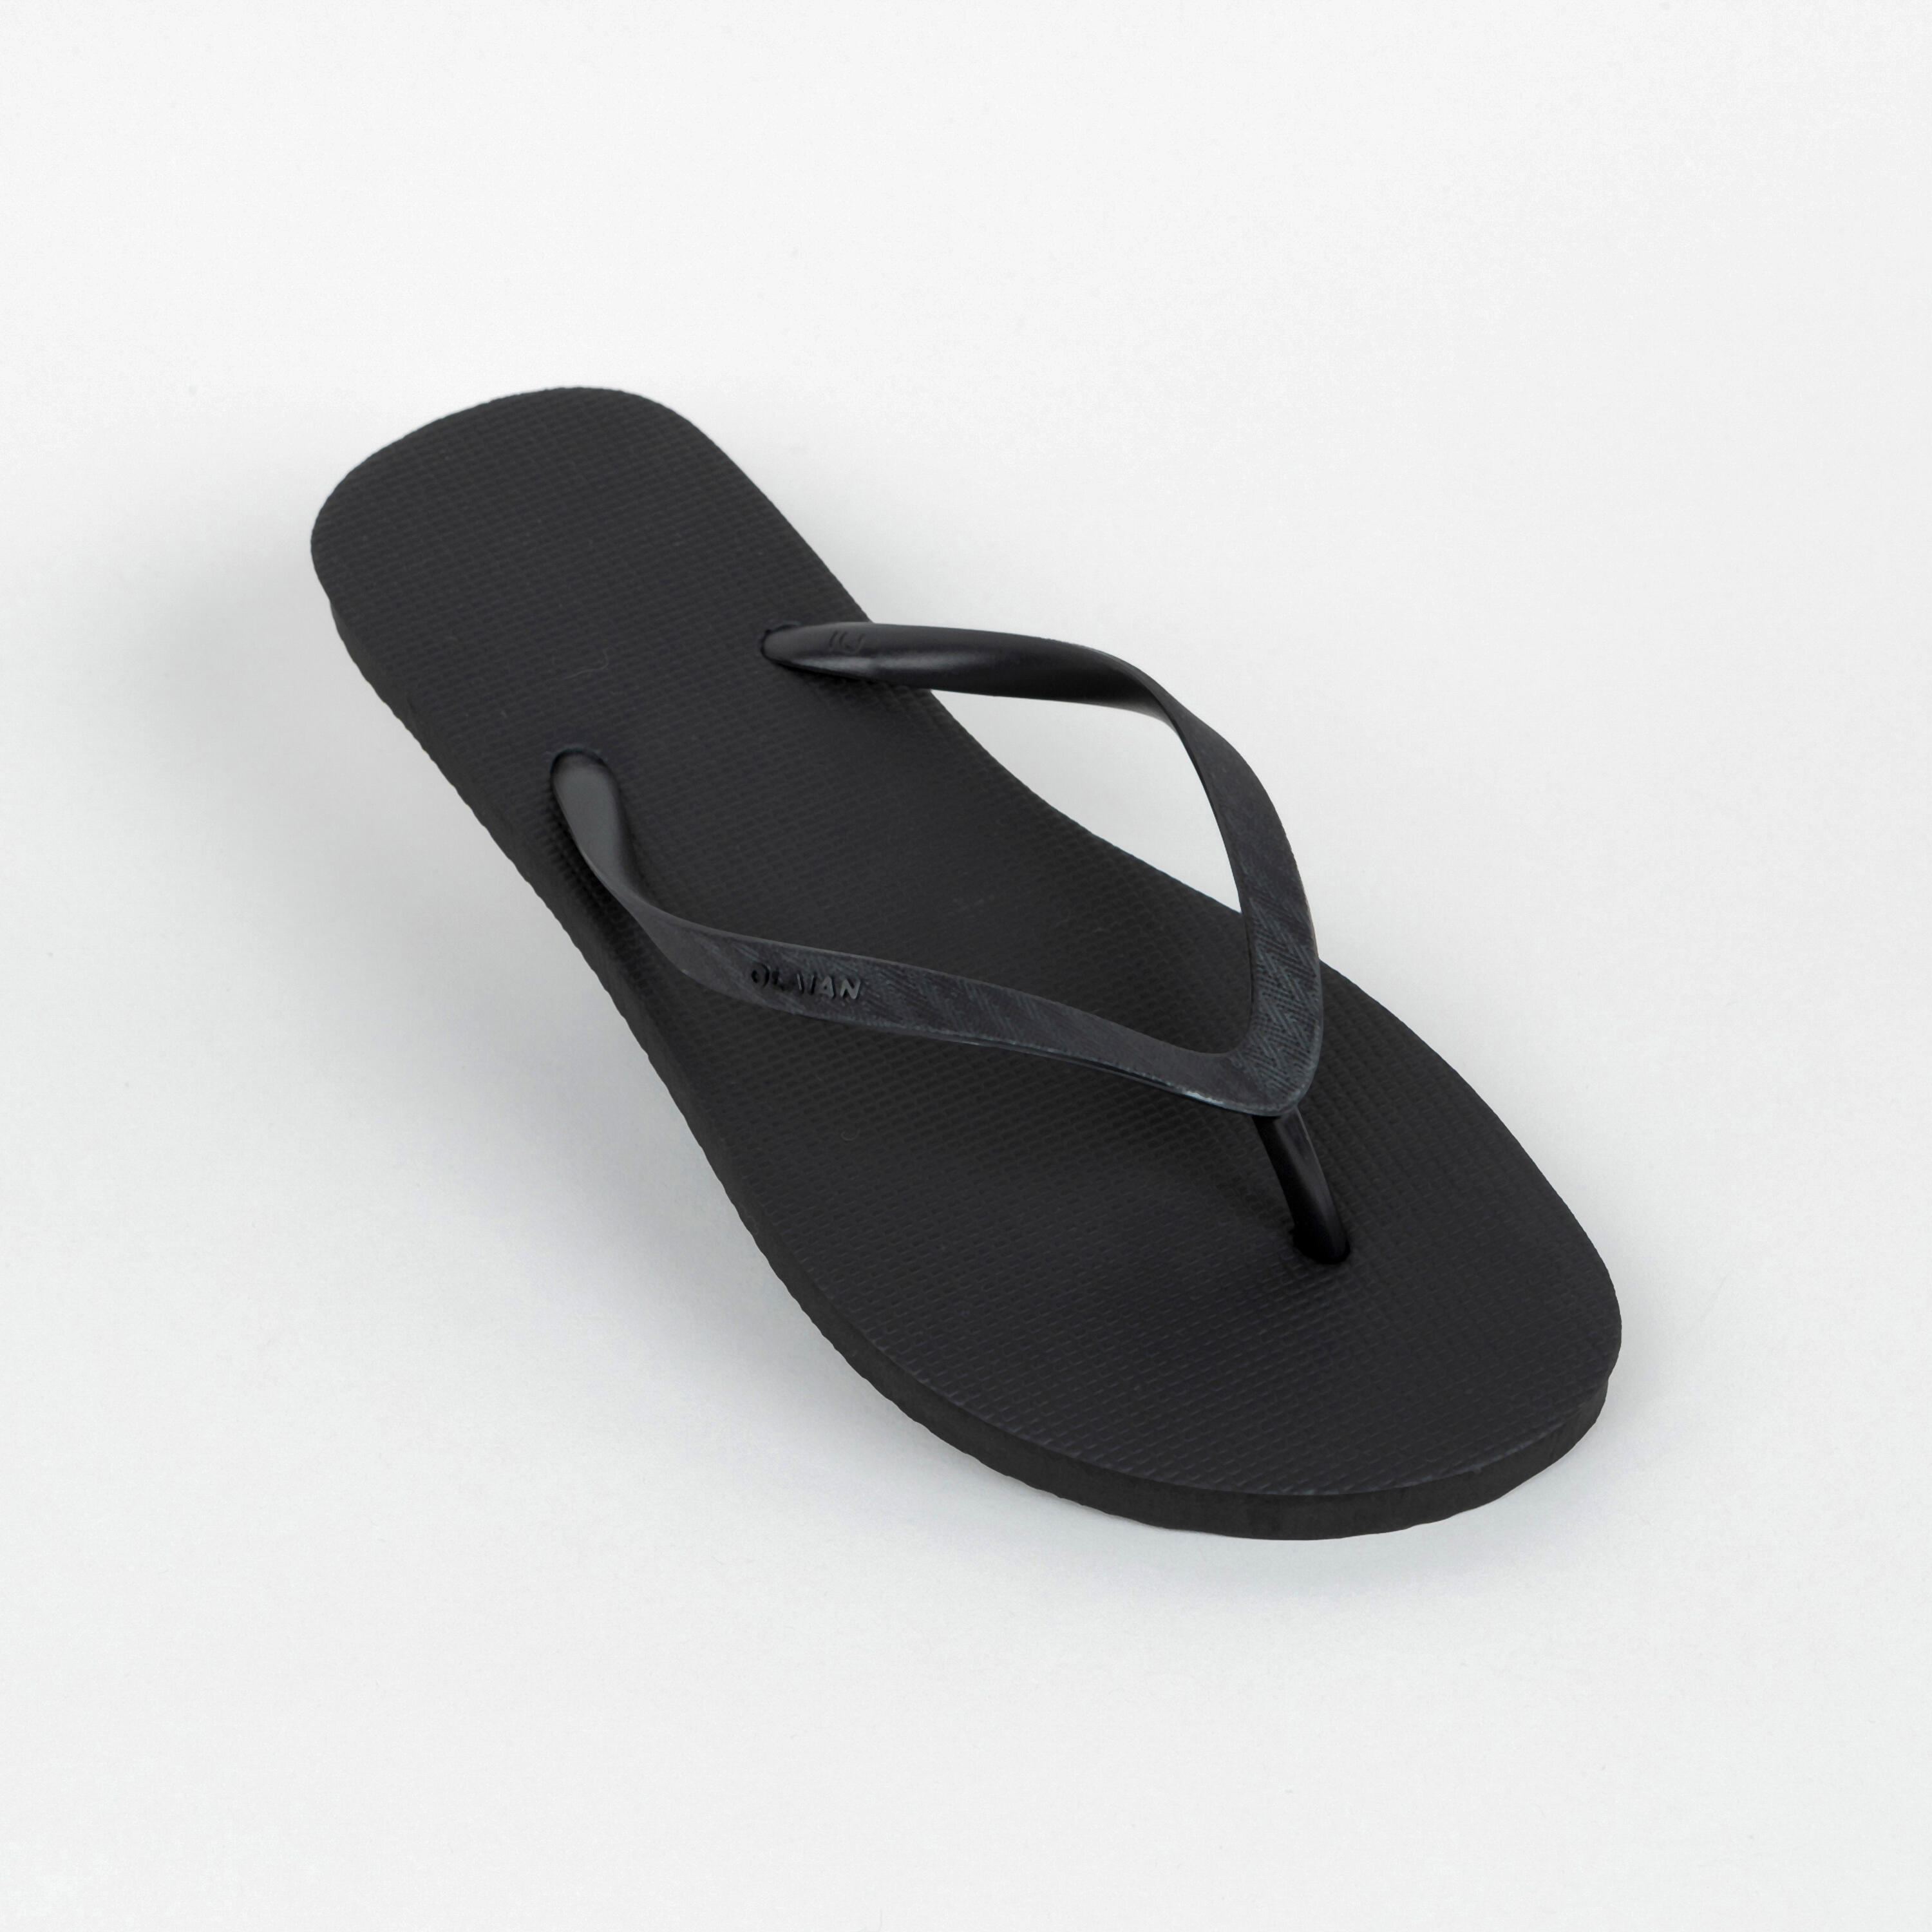 Flangesio Popular Men Flip Flops Big Size 46 New Summer Shoes Non